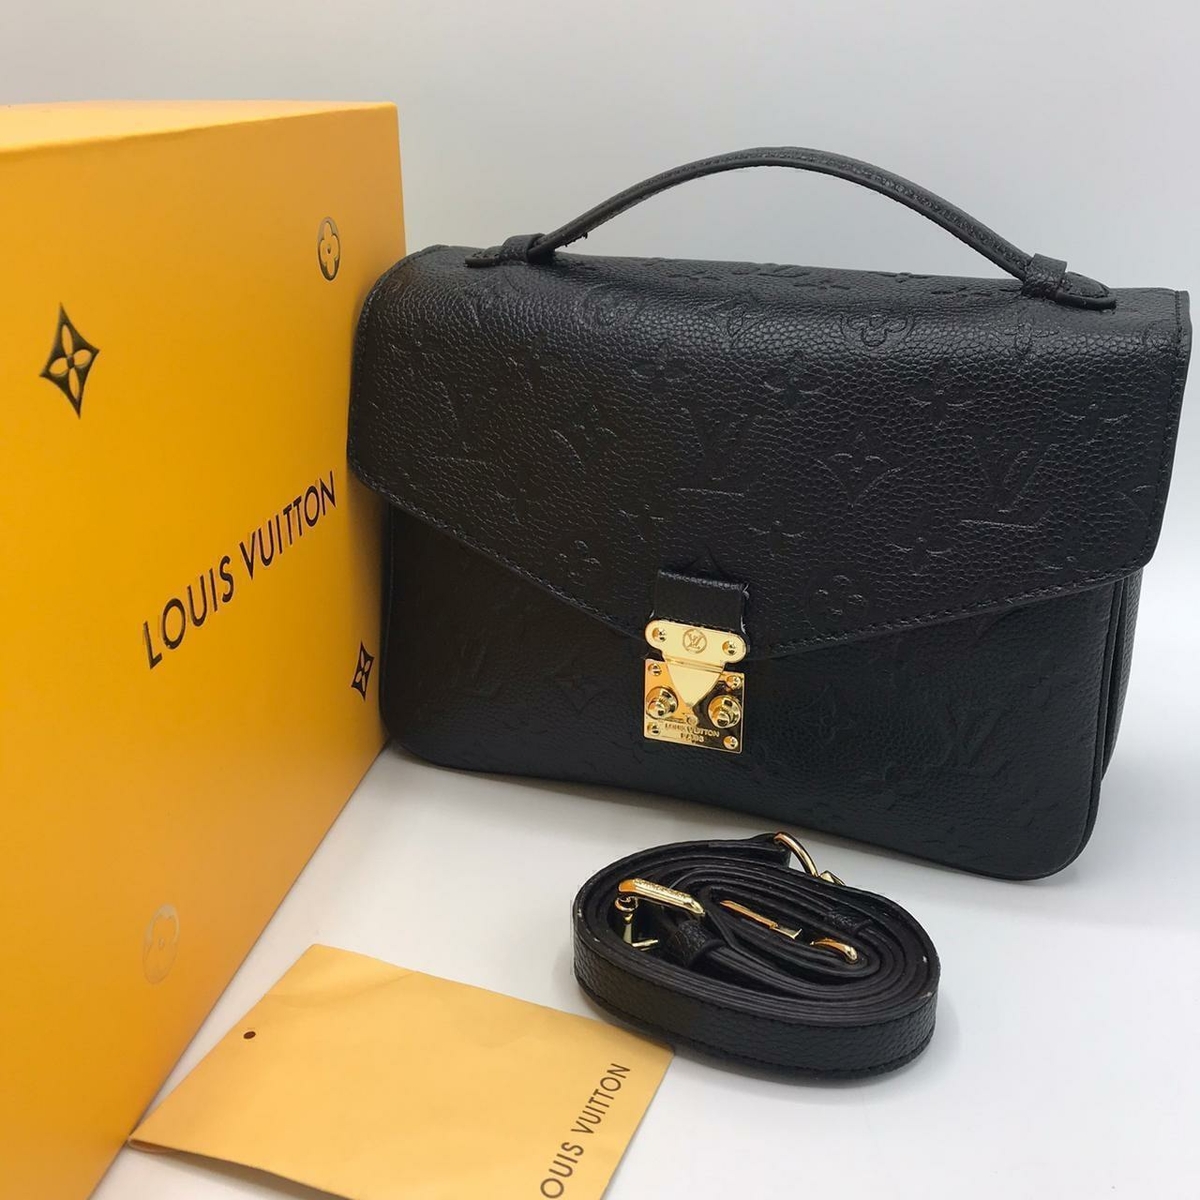 Louis Vuitton сумка #1 в «Globestyle» арт.2977ND